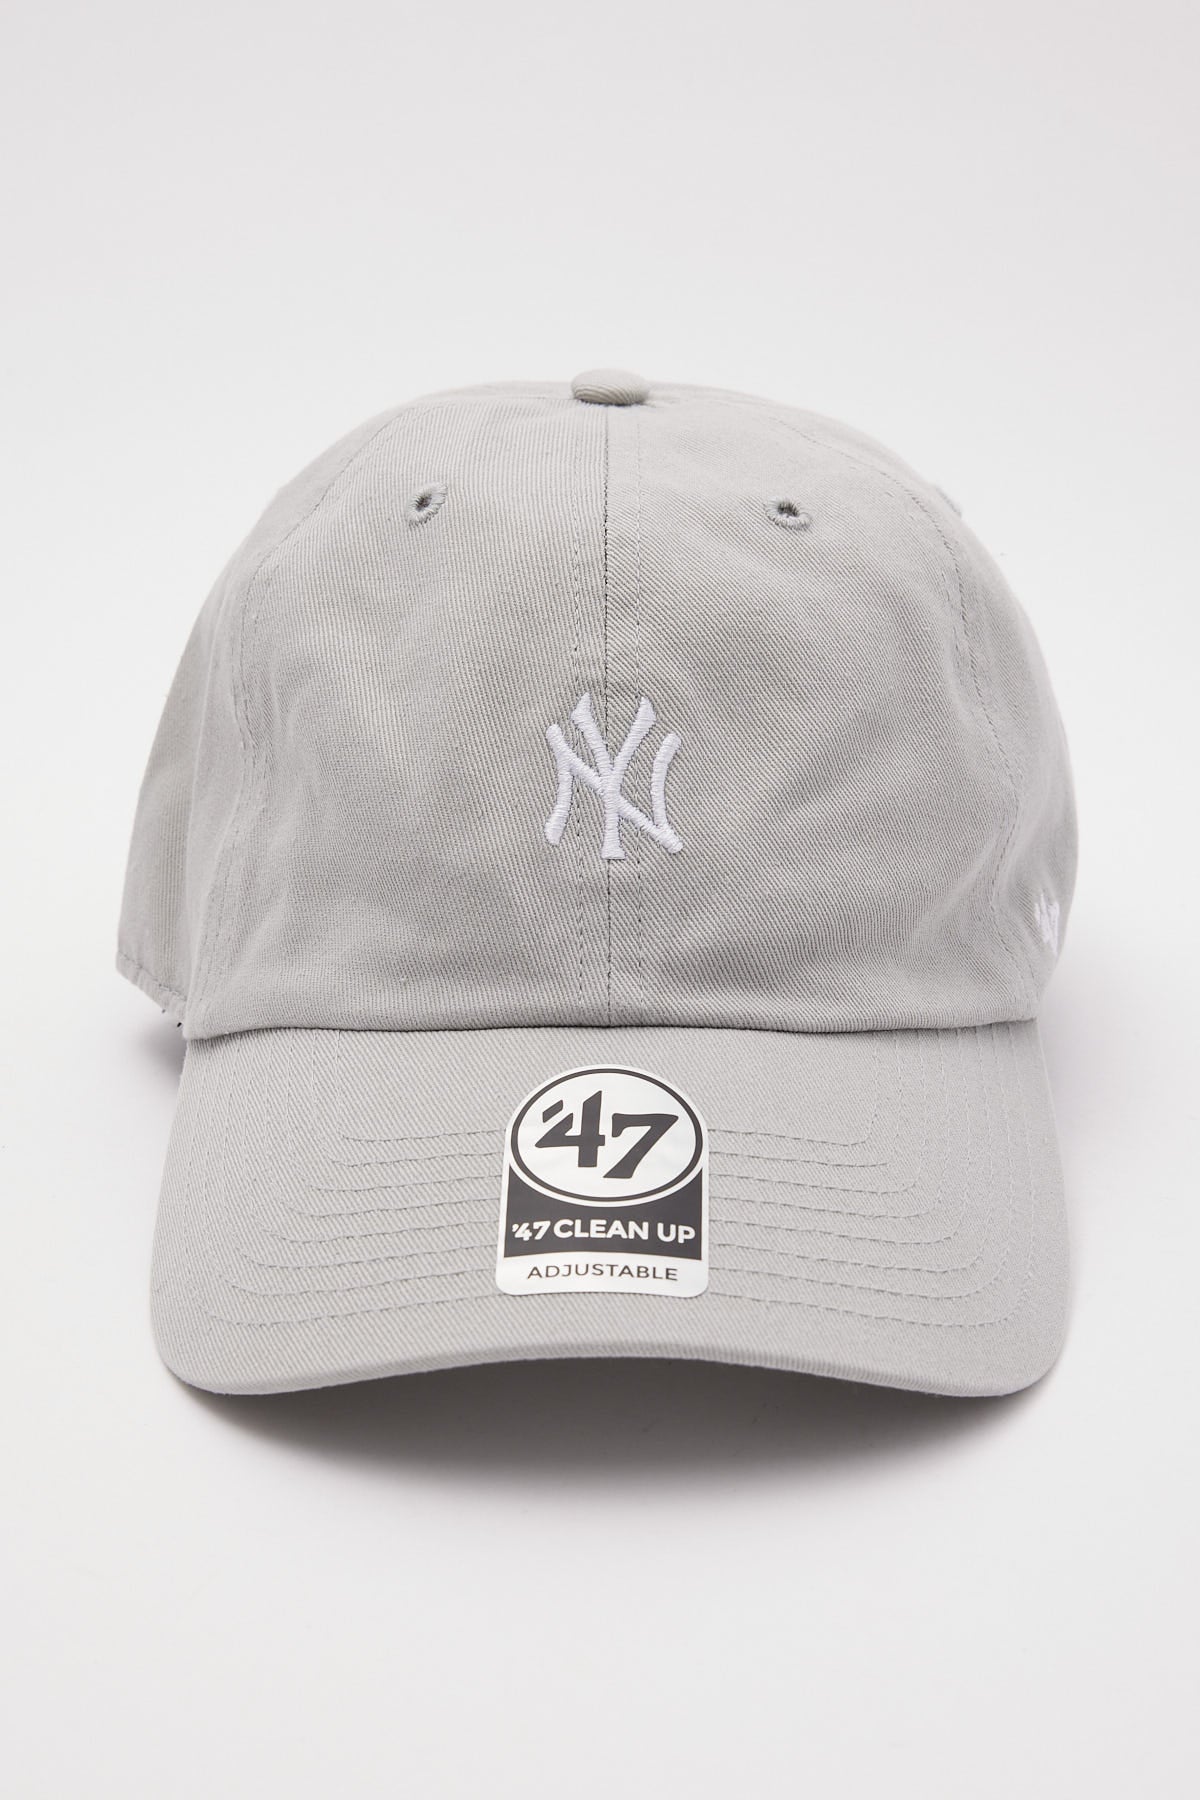 47 Brand Clean Up Base Runner NY Yankees Gray